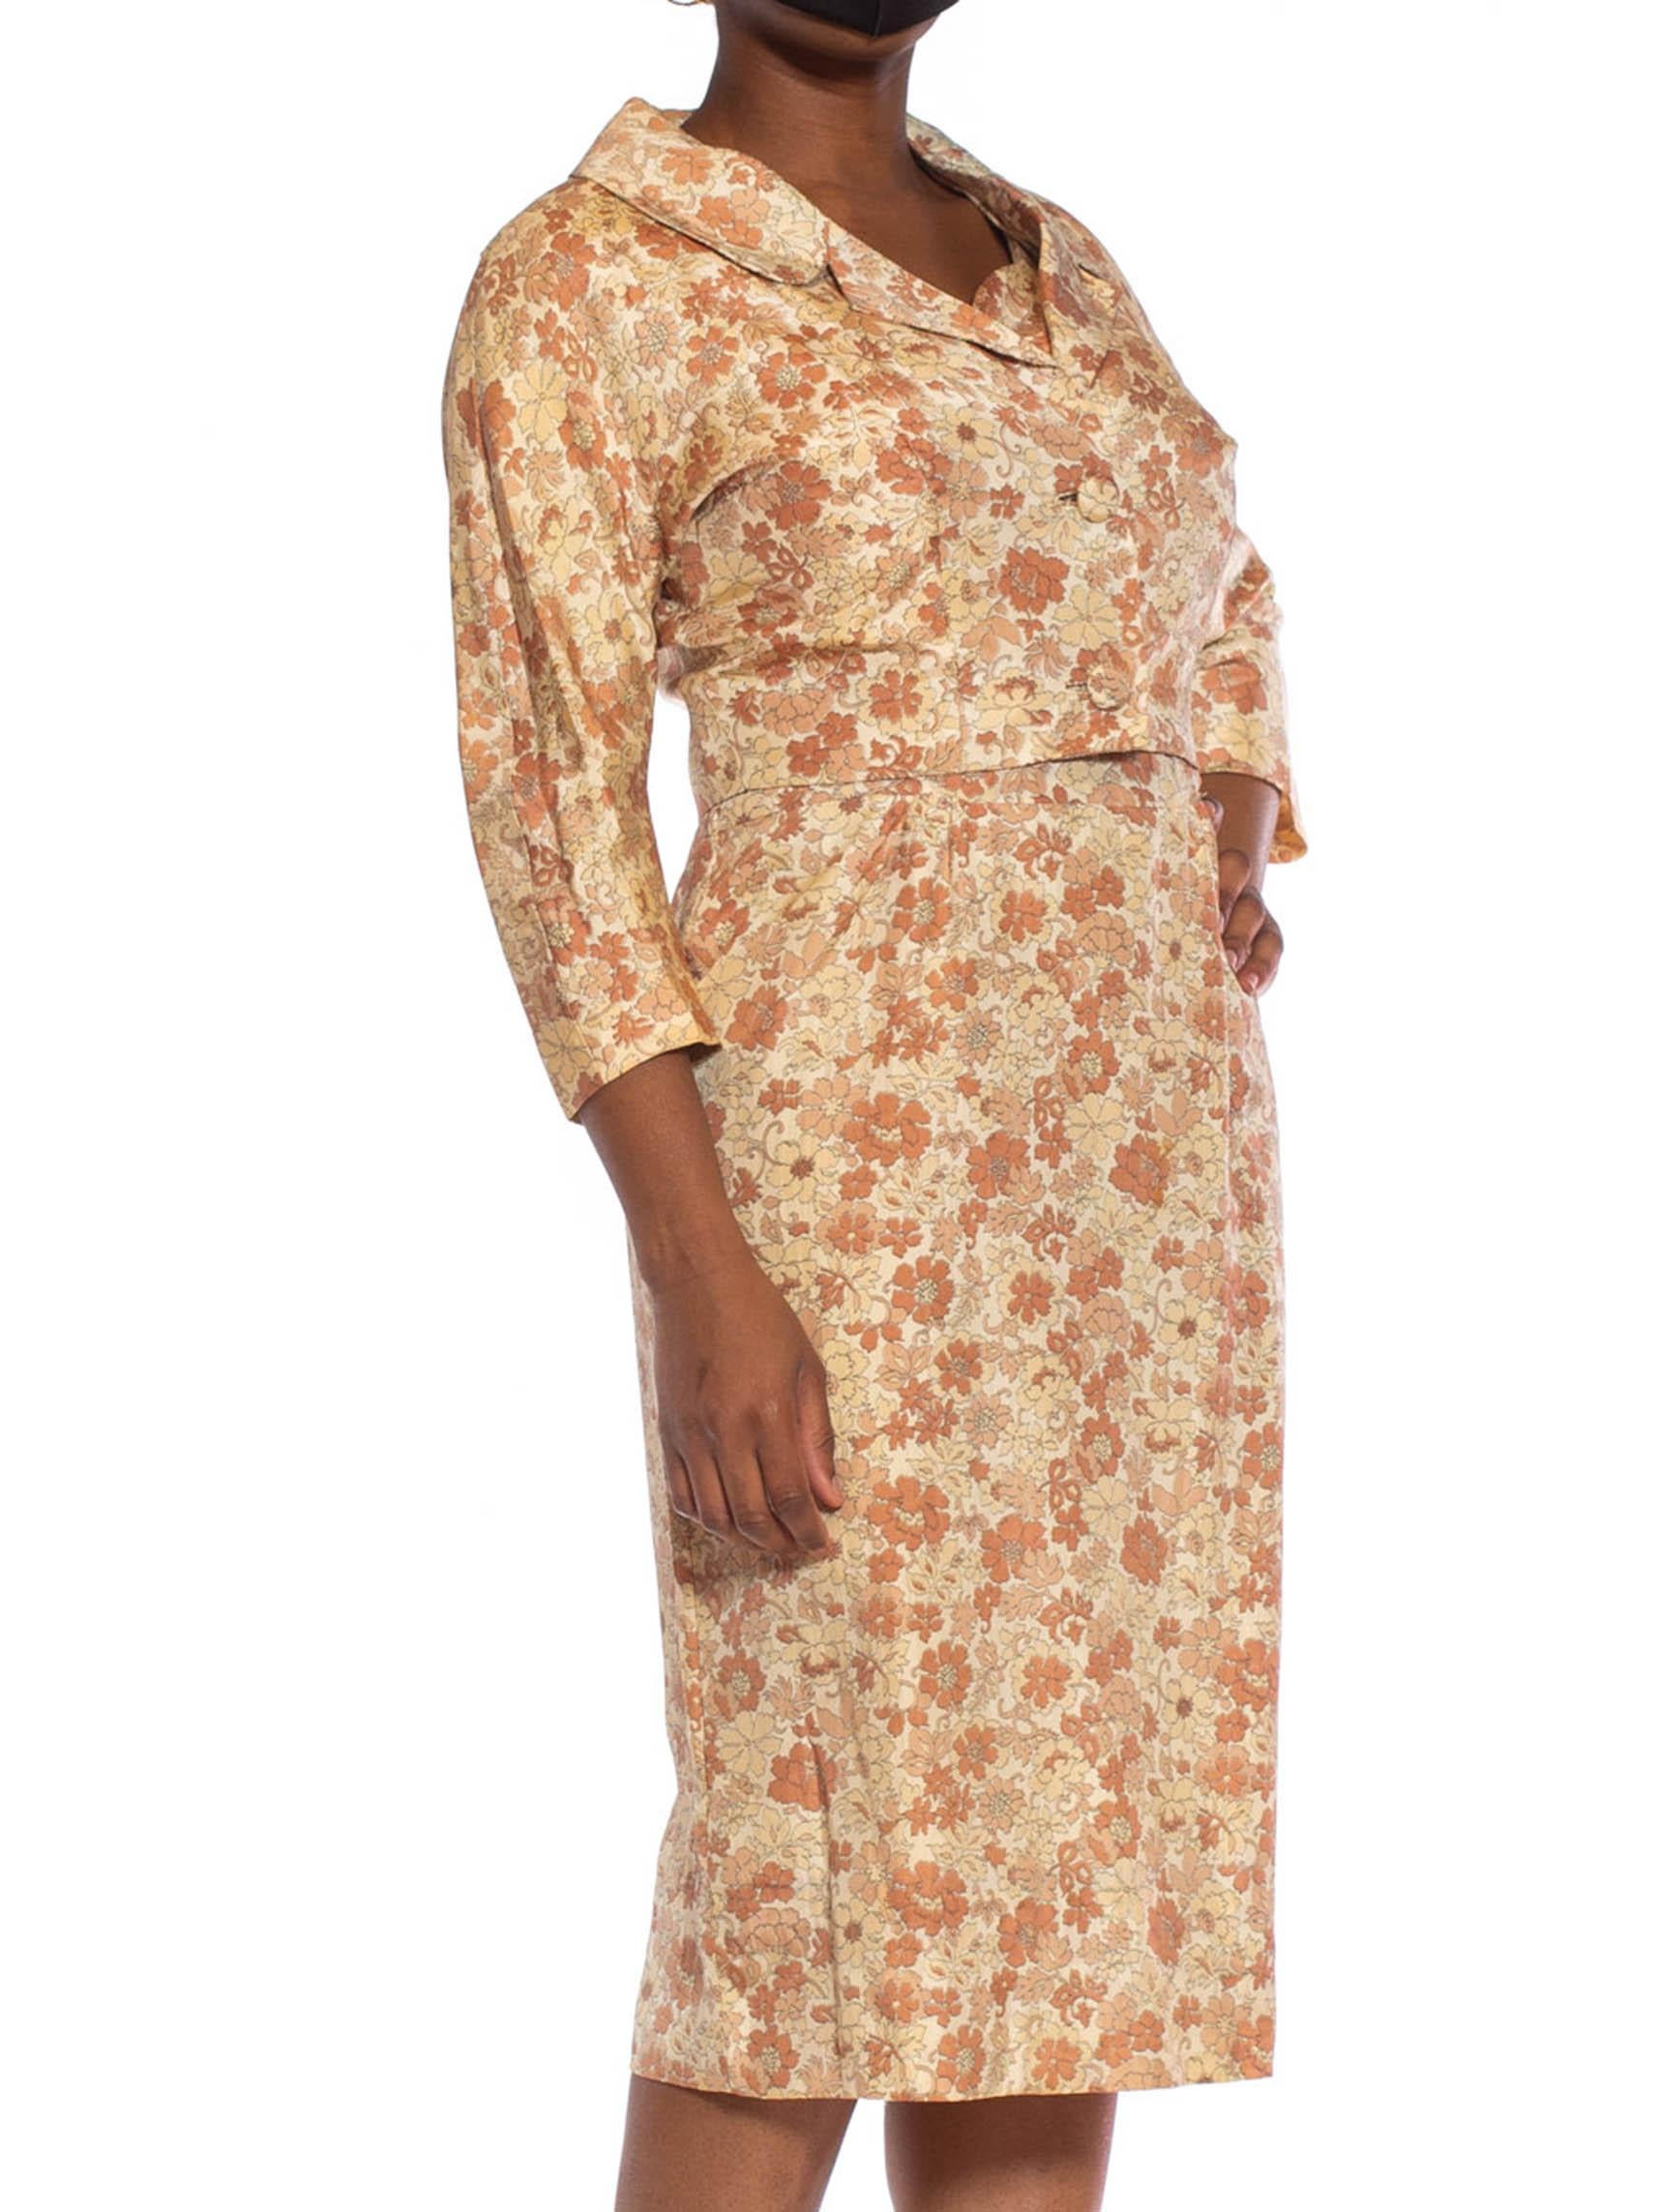 1950S Beige & Brown Silk Indian Floral Print Dress Jacket Ensemble For Sale 3